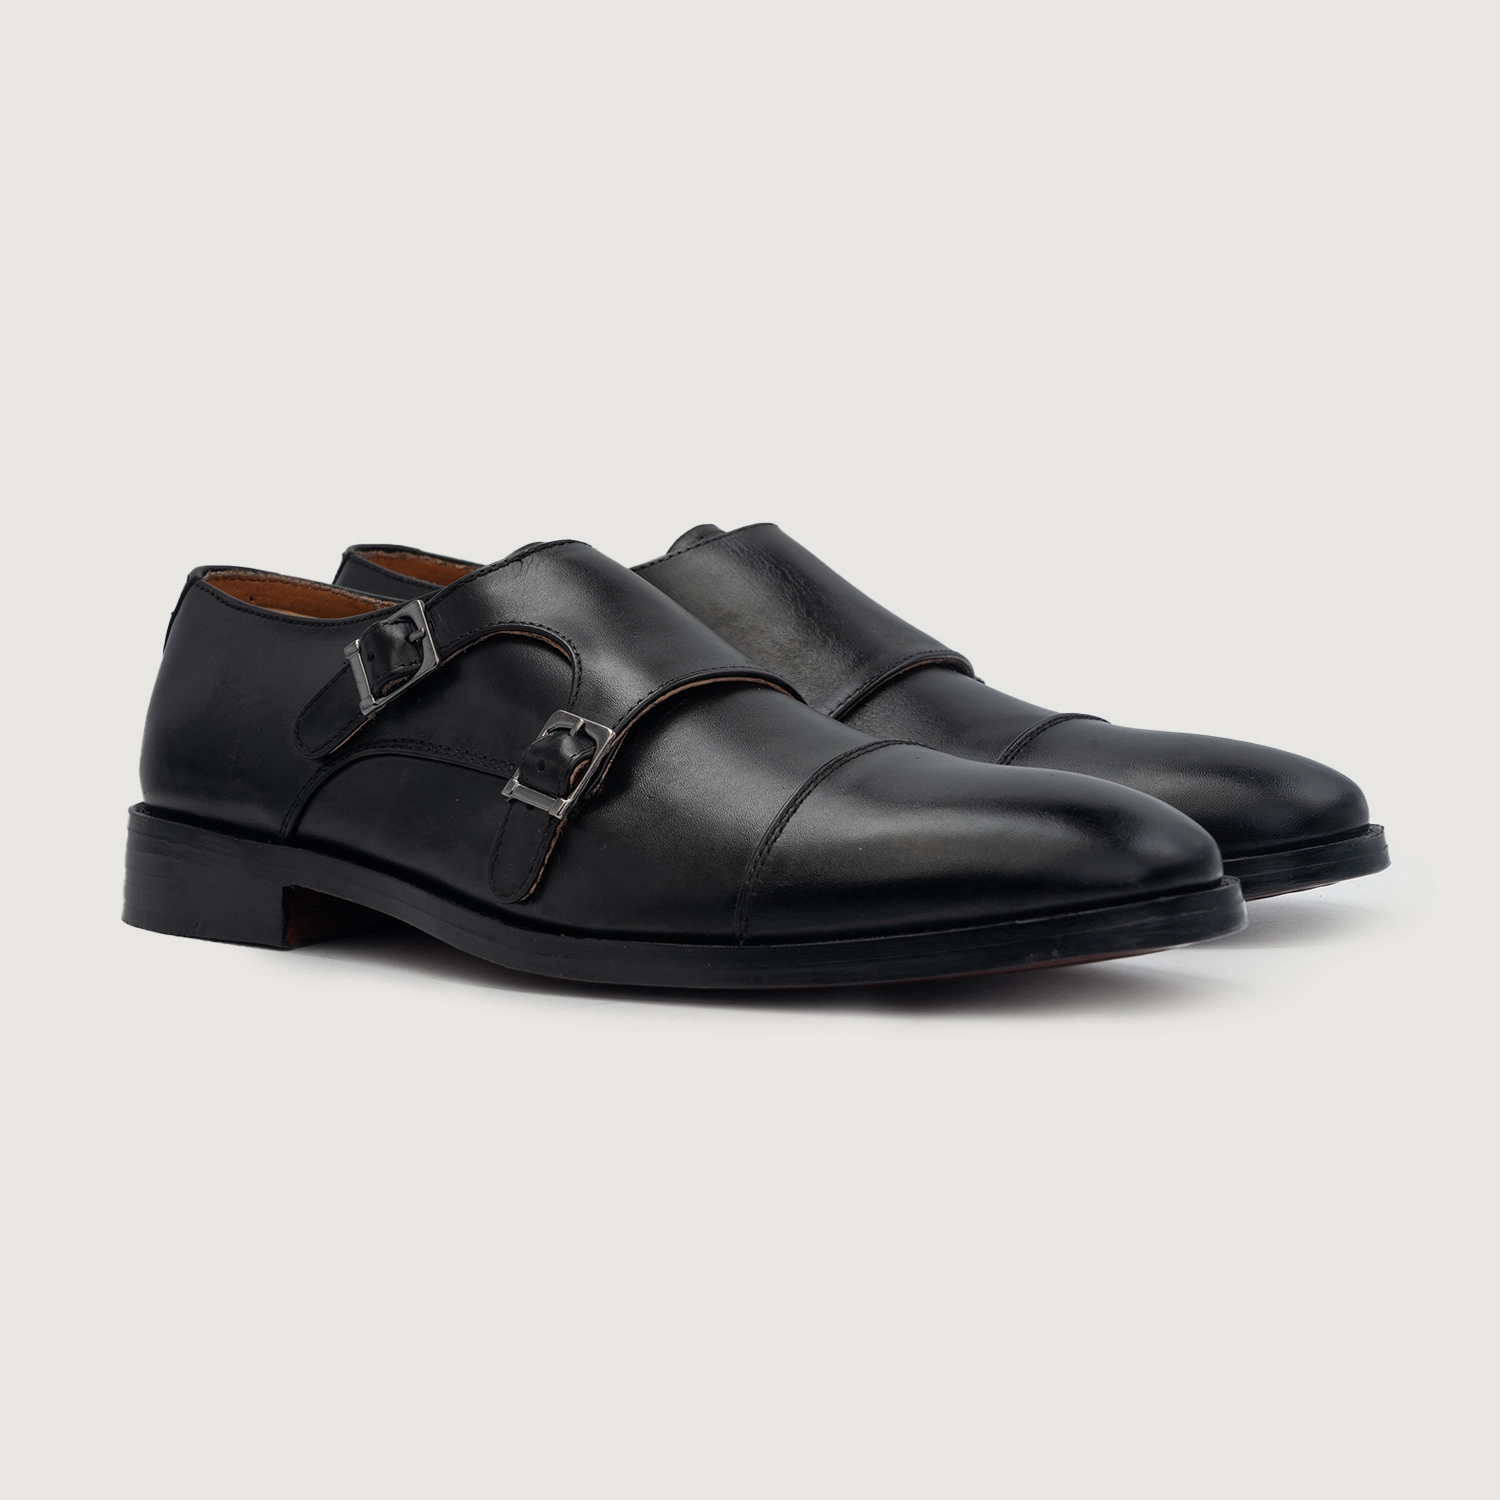 Boston Double Monk Strap Black Leather Shoes
